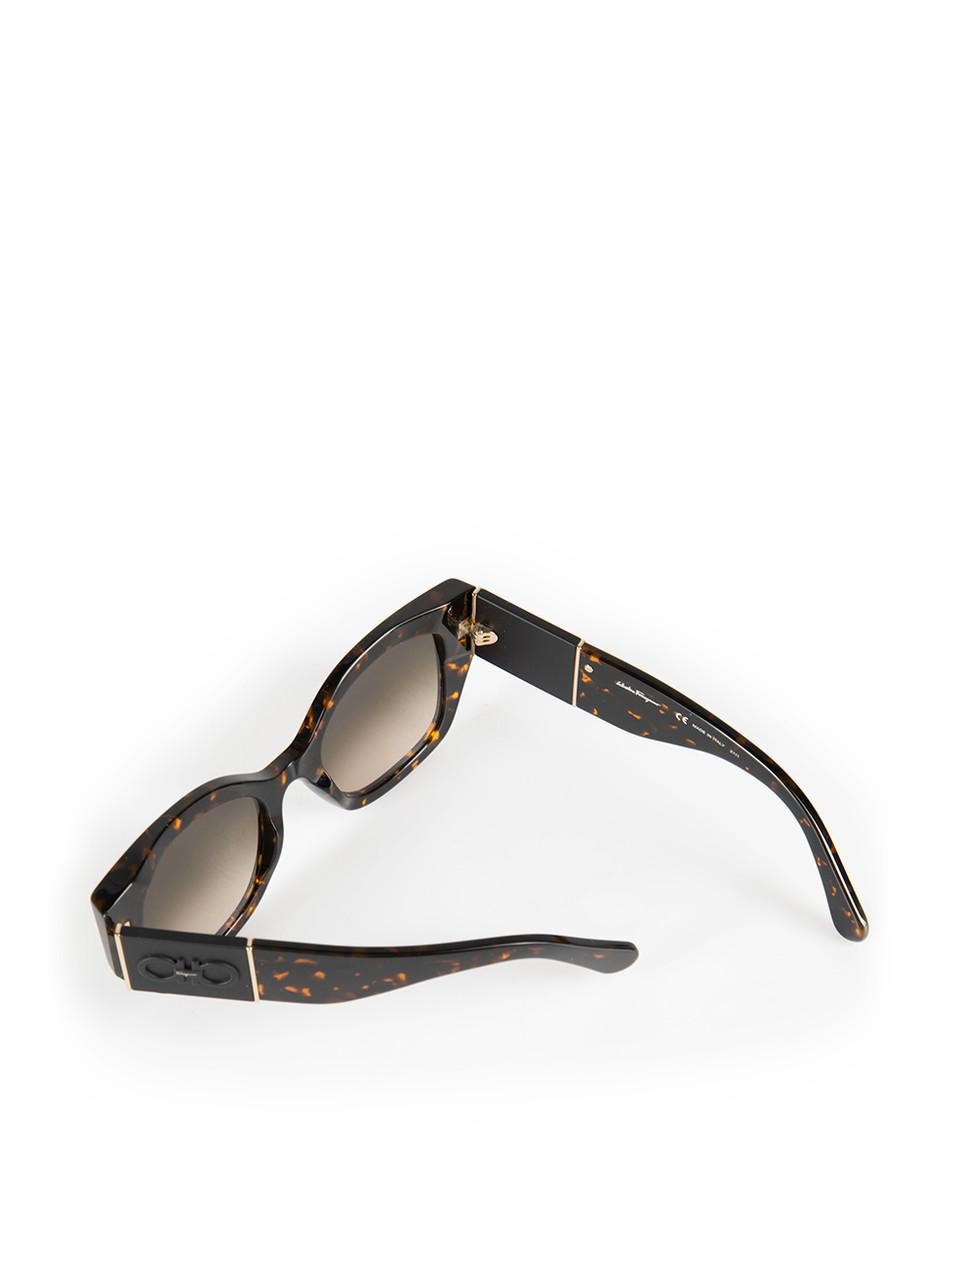 Salvatore Ferragamo Vintage Tortoise Square Frame Sunglasses For Sale 3